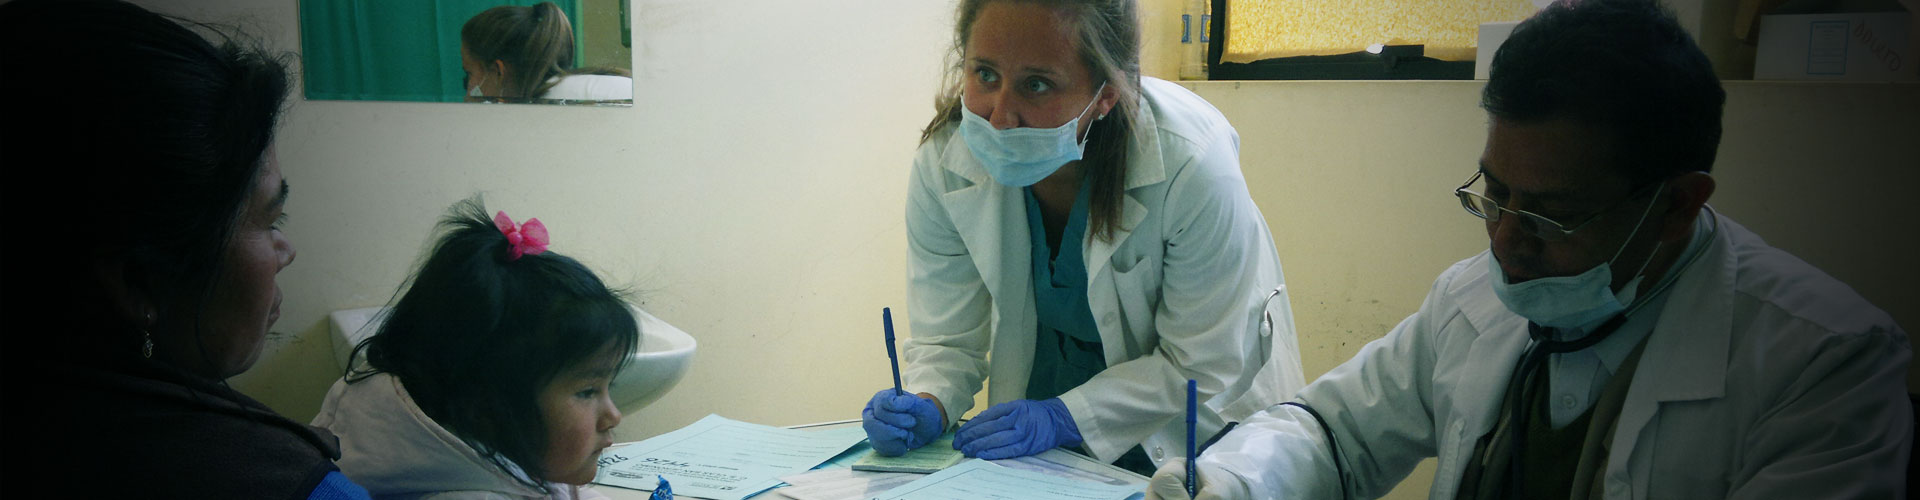 Medizinisches Freiwilligenprogramm in Peru - Cusco